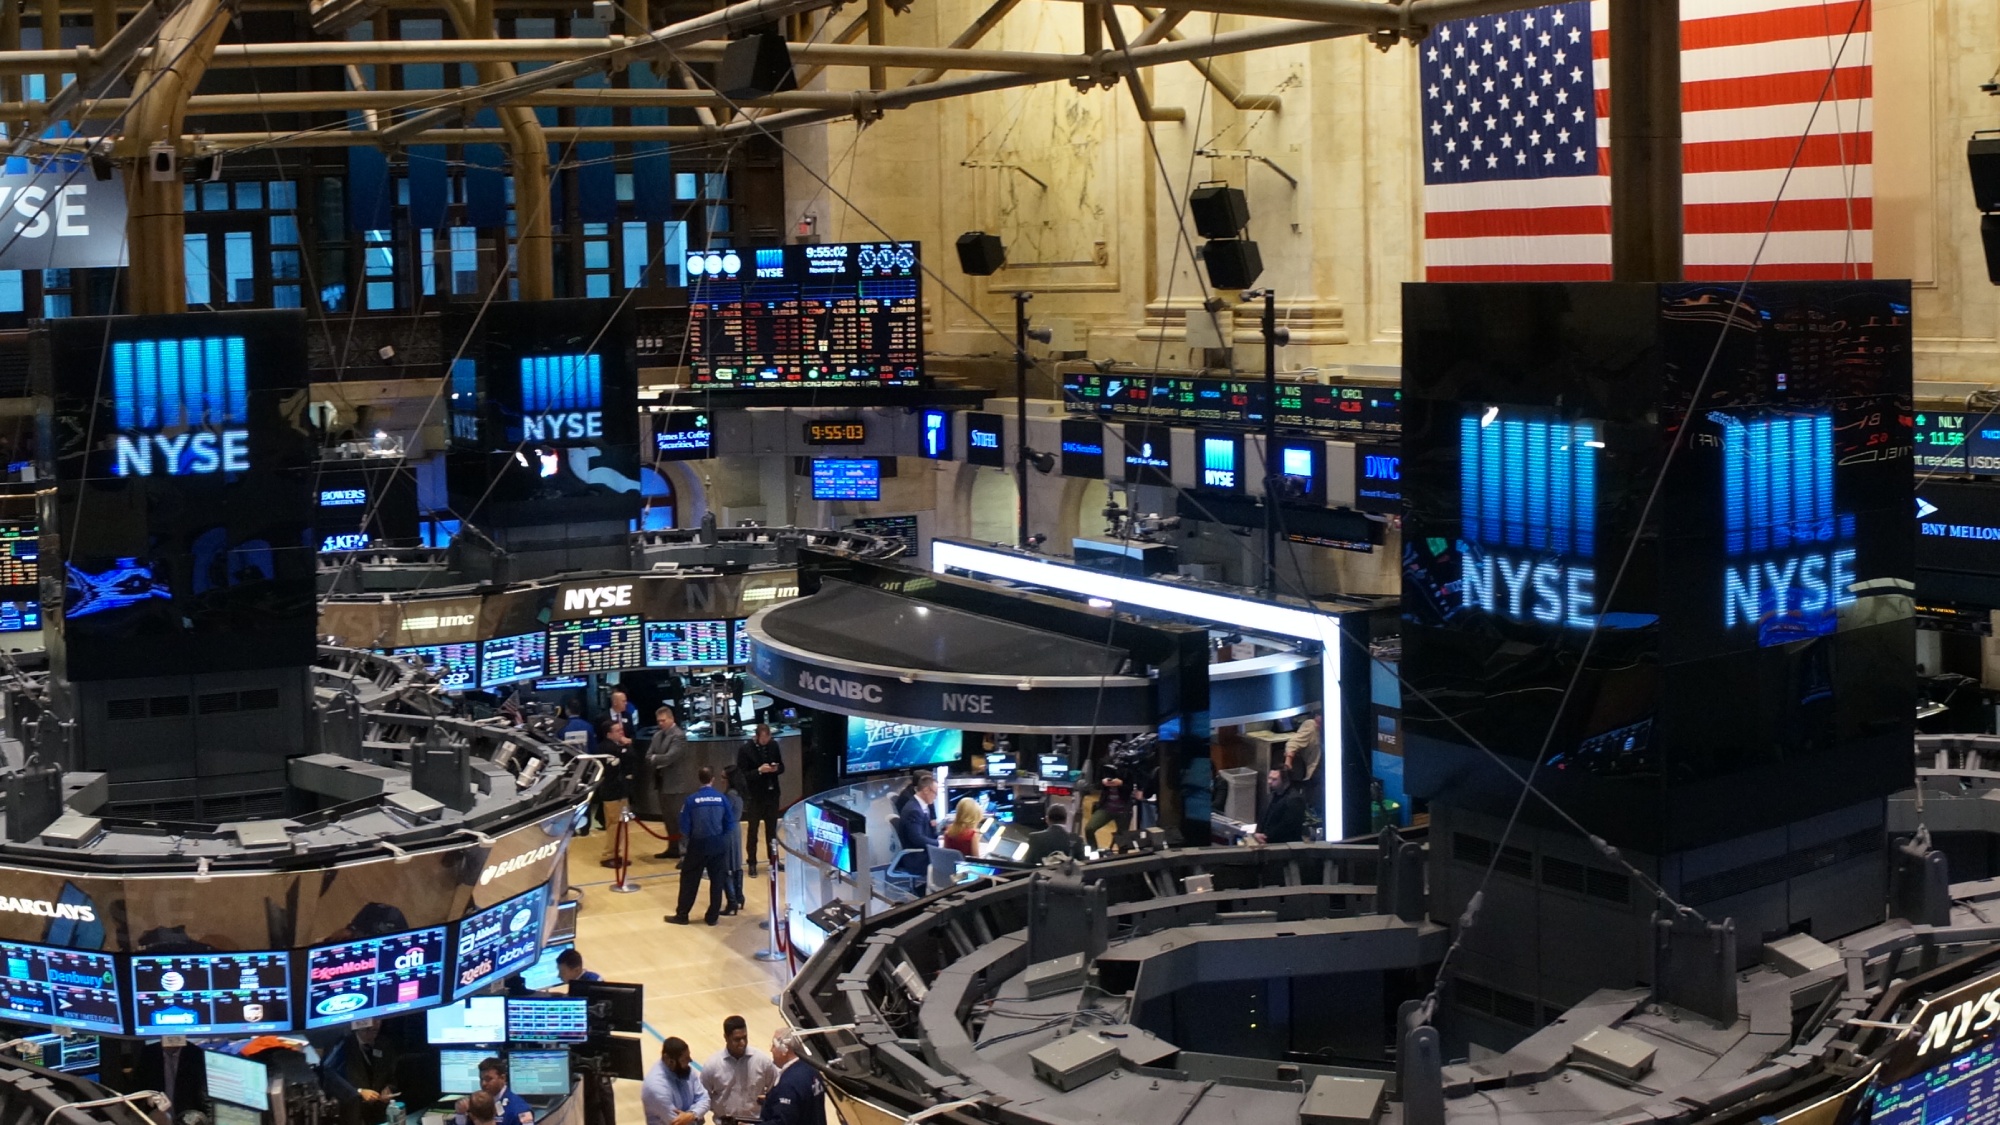 NYSE, bolsa de valores de Nova York (Imagem: RosieTulips/Flickr)